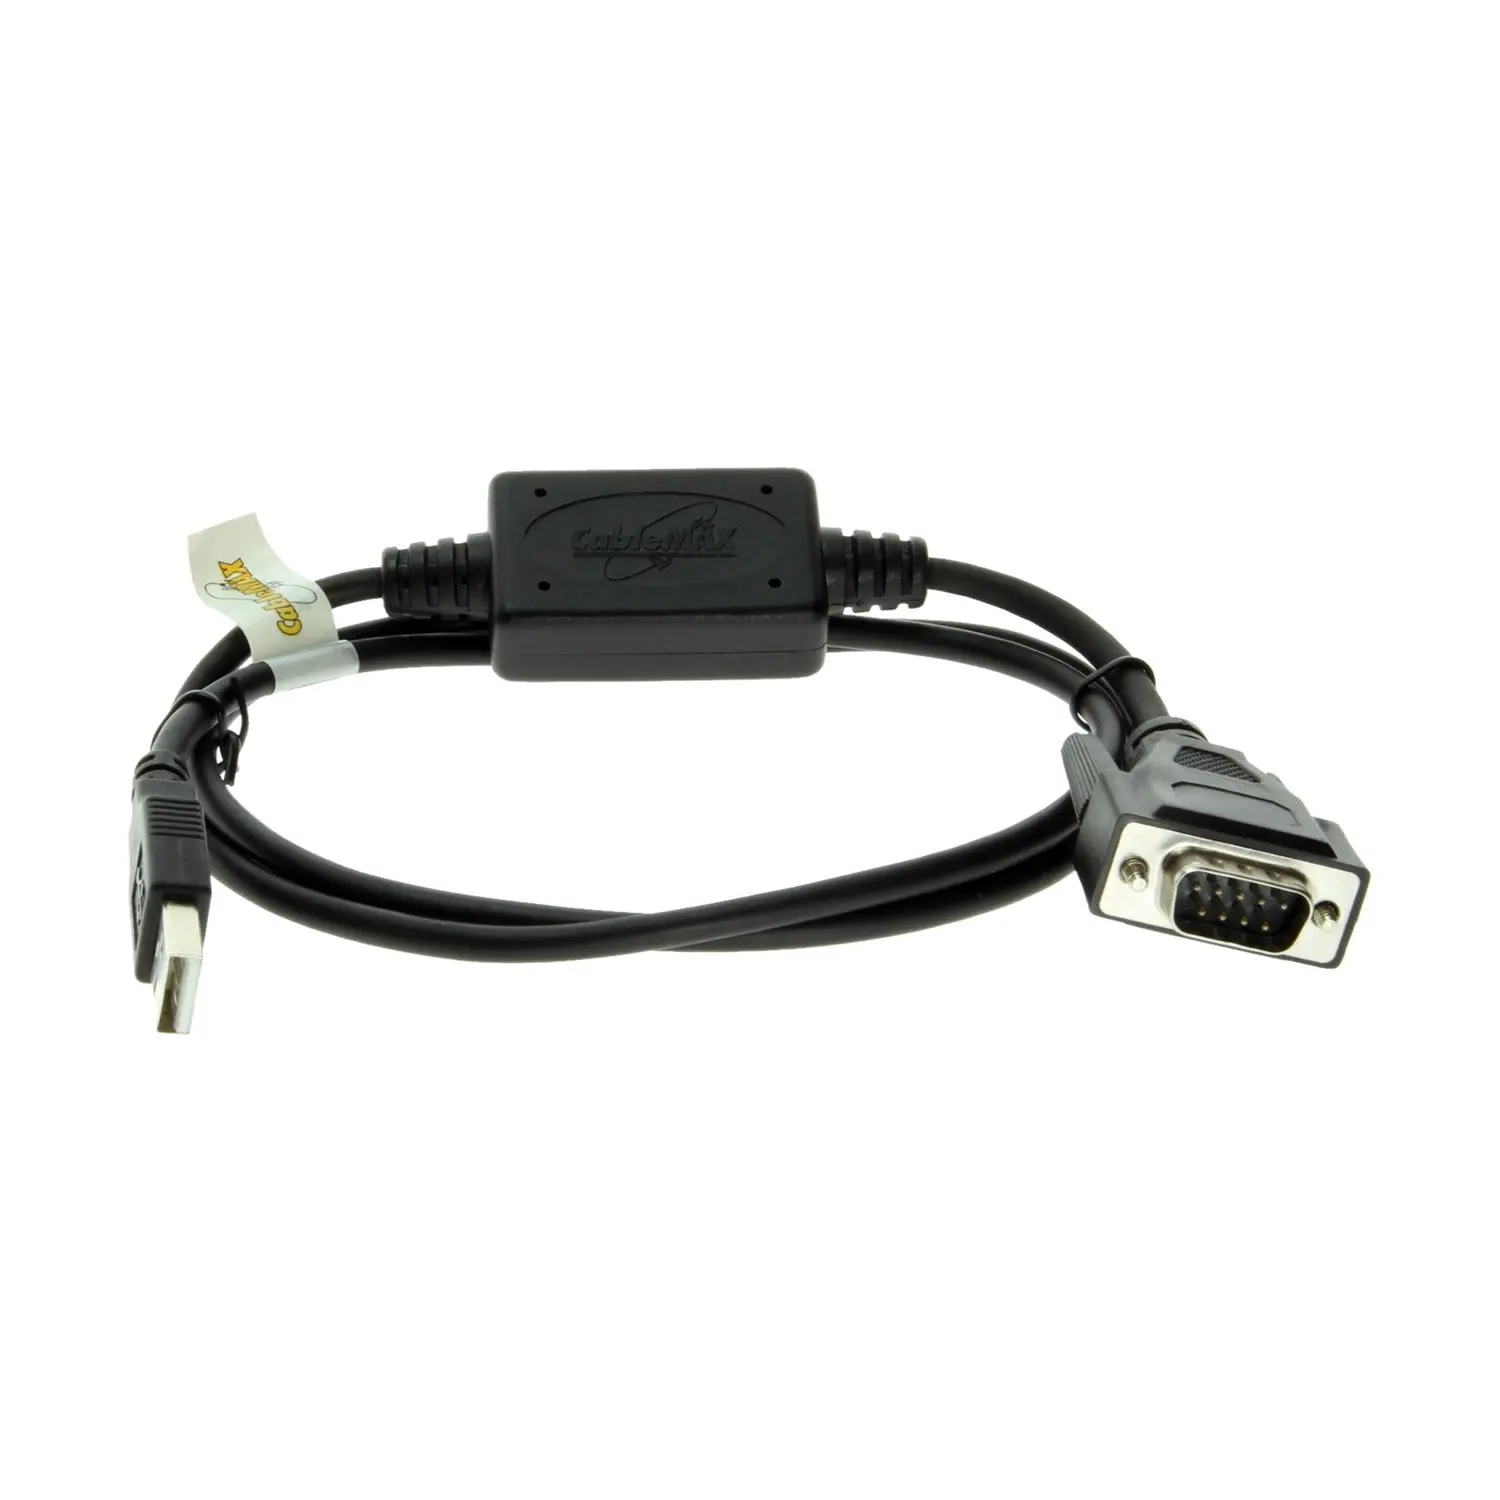 sabrent model sbt-usc6k 6ft usb 2.0 serial cable adapter